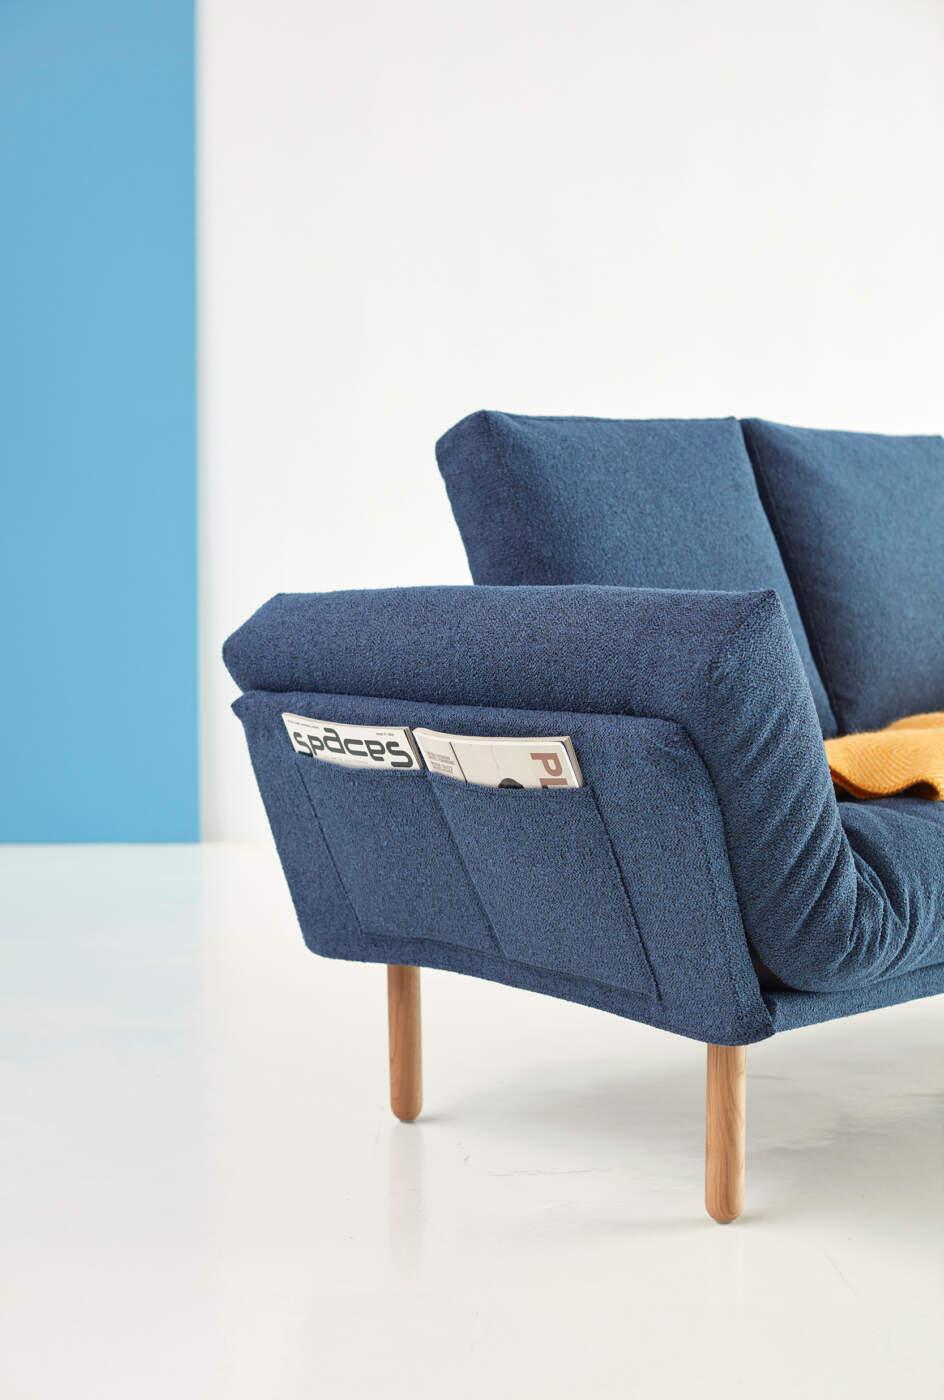 sofabed folding armchair blog post kanapéágy fotelágy blog